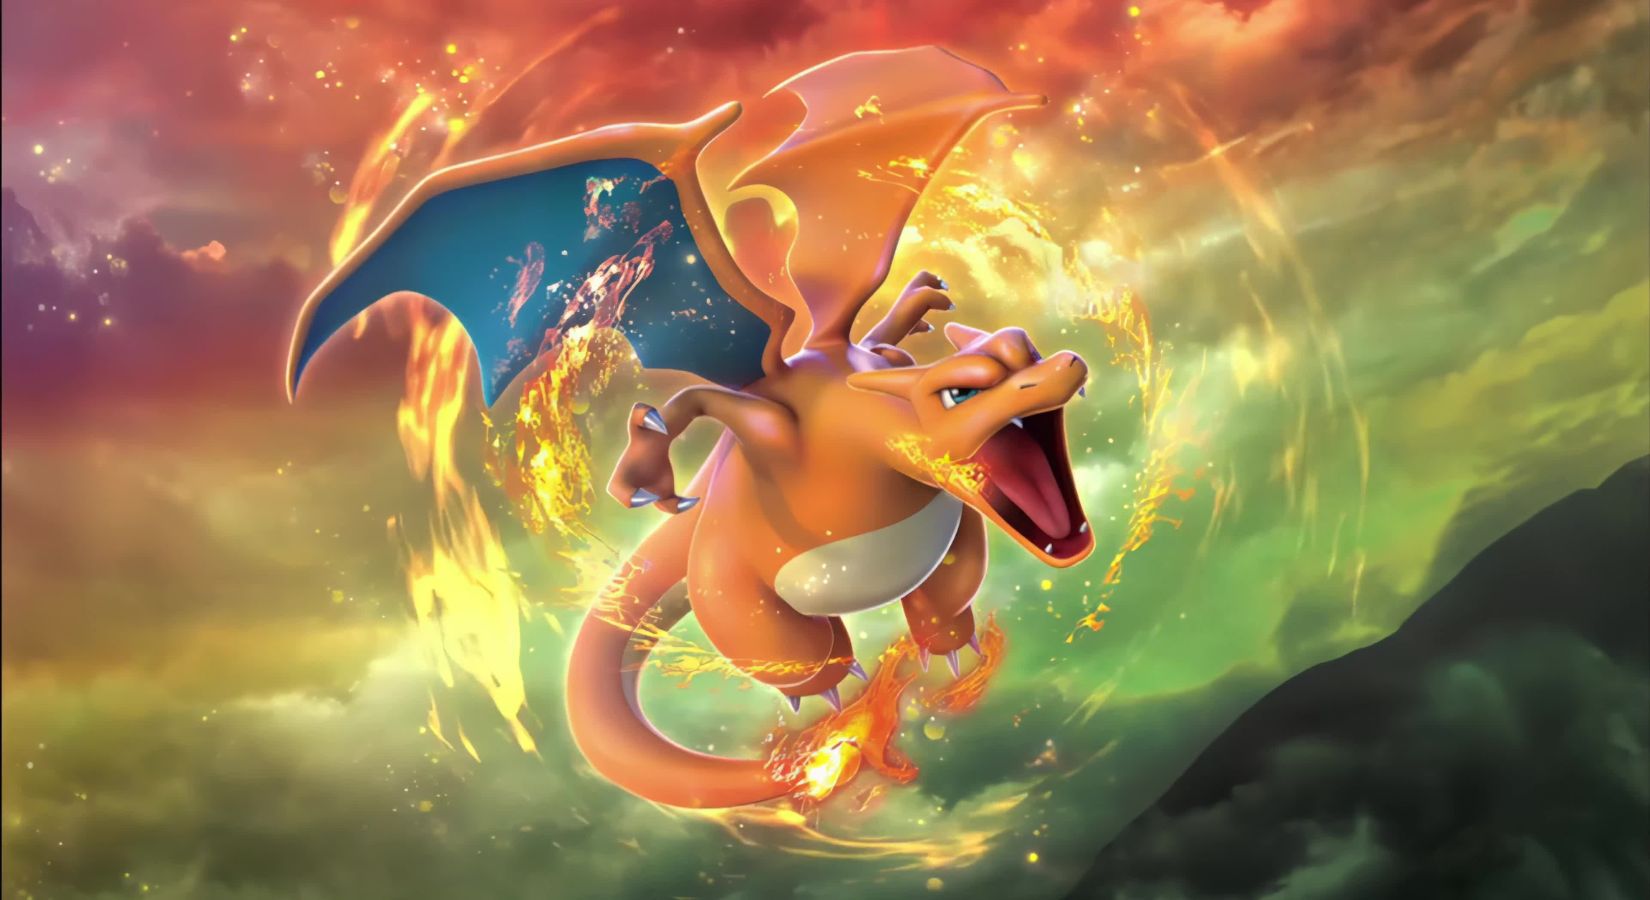 The Phenomenal Firepower of Charizard - The Ultimate Pokemon